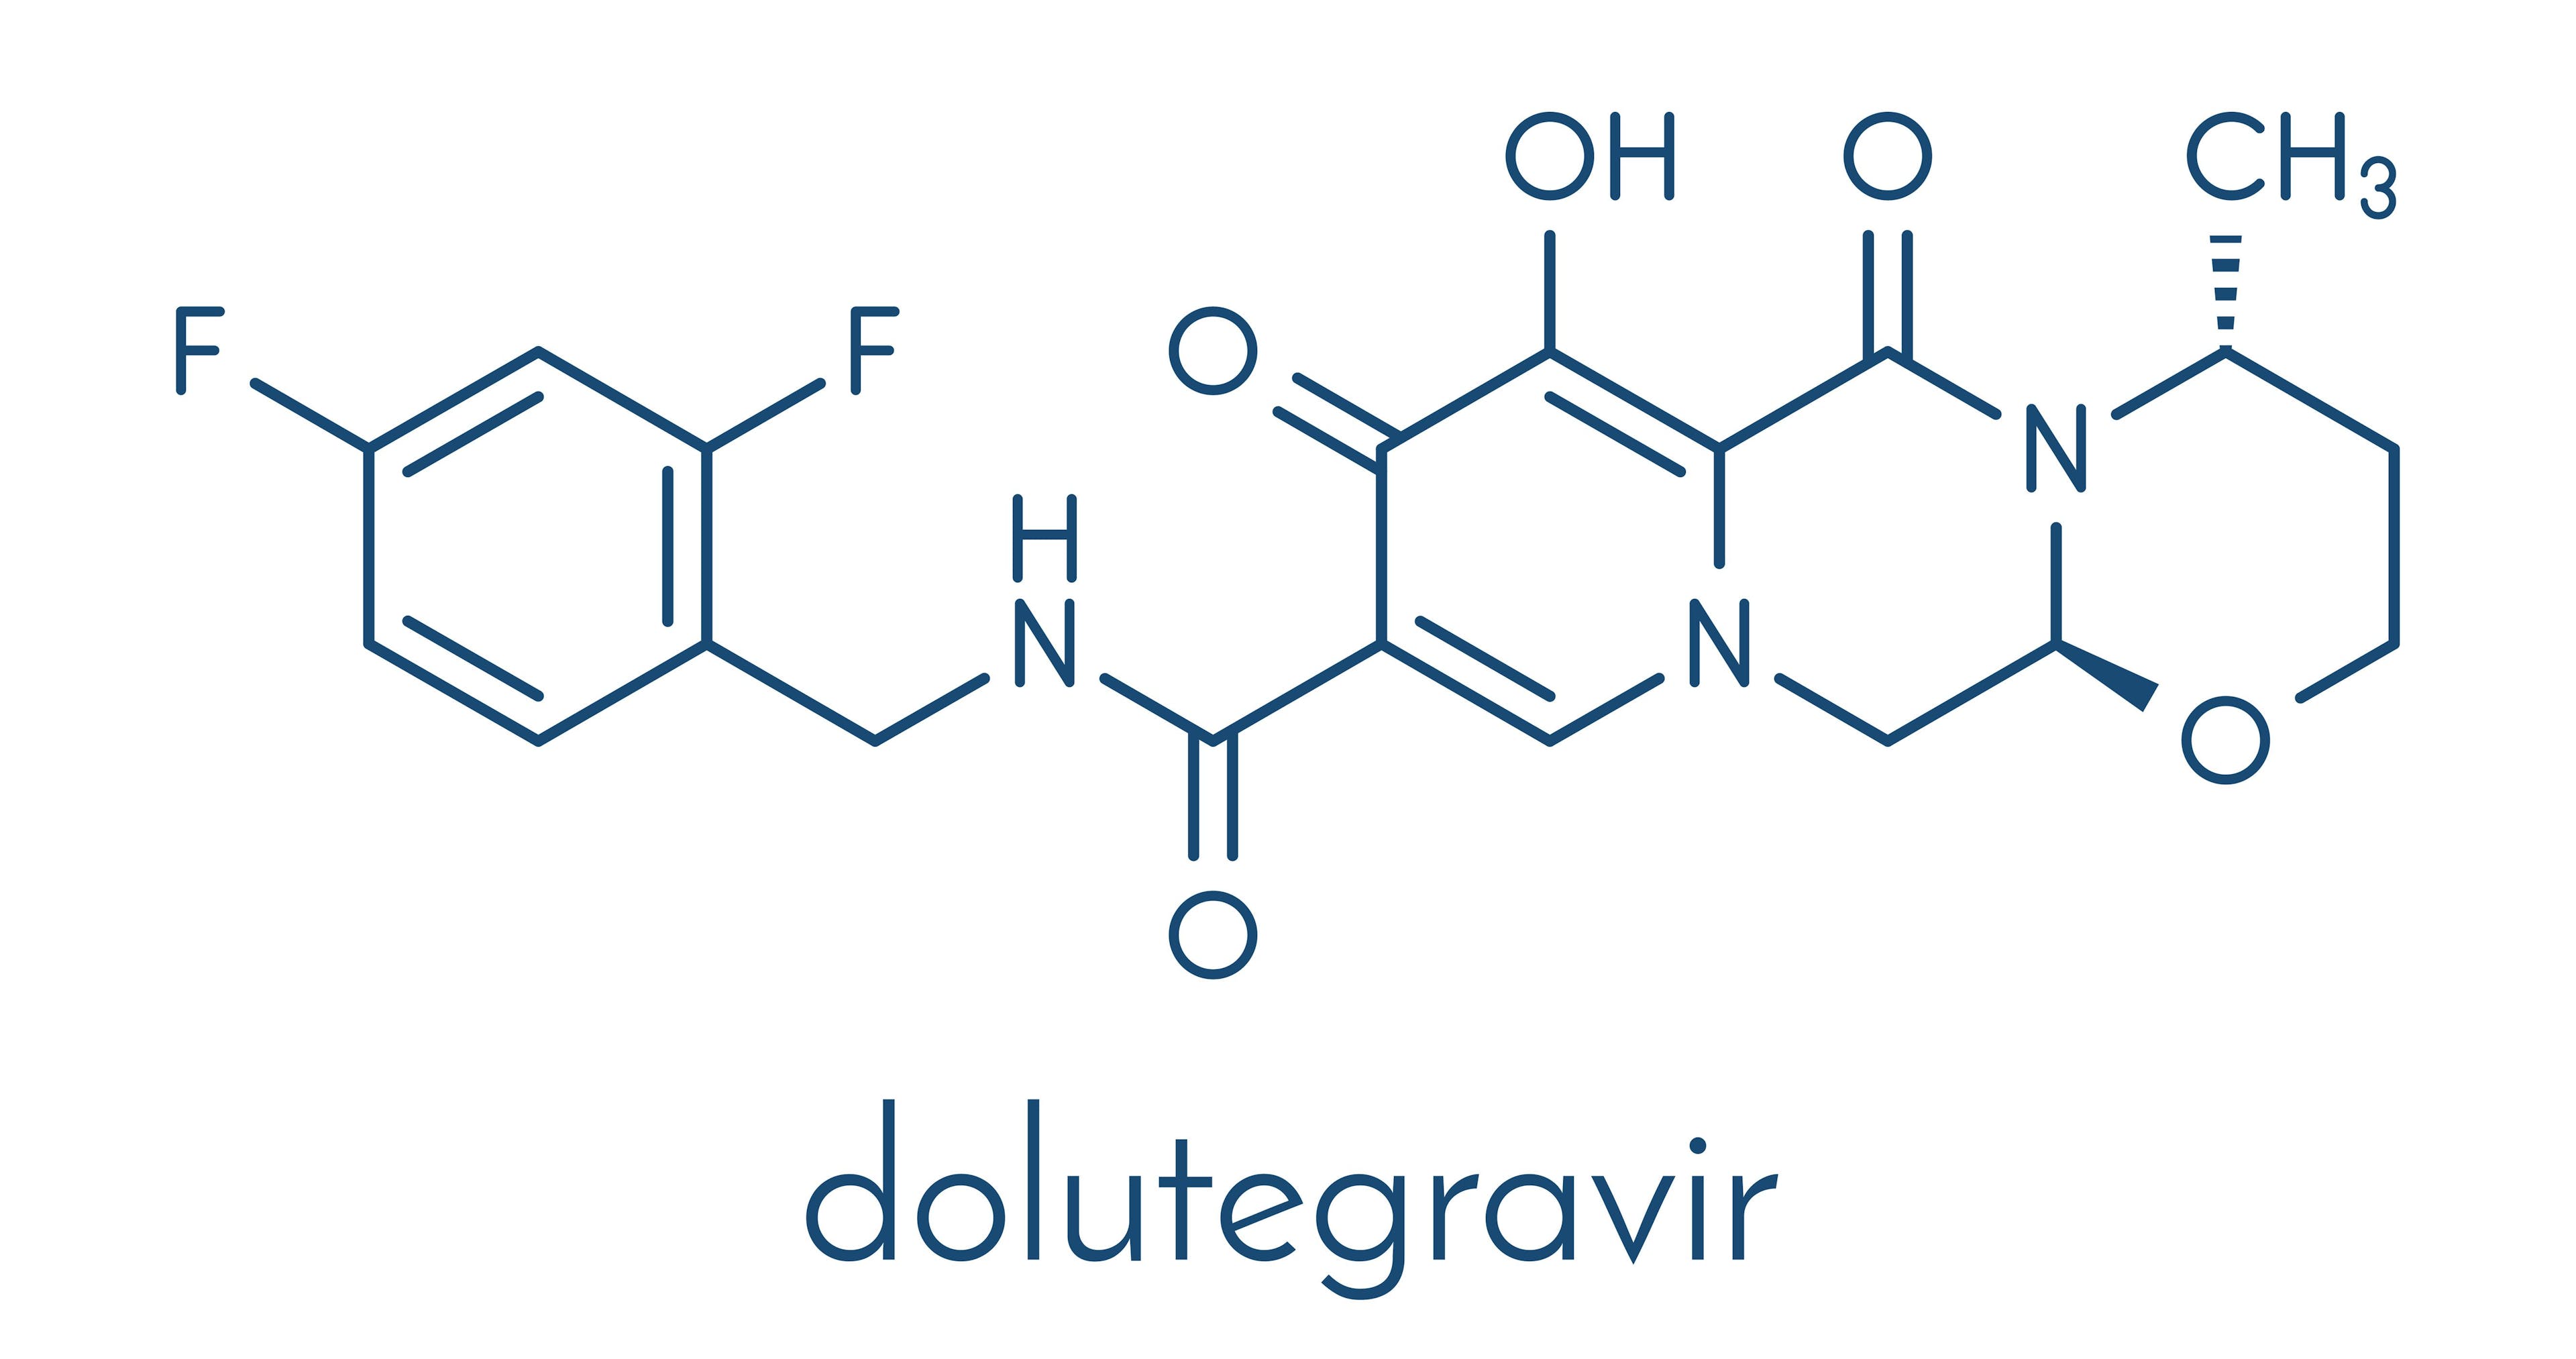 Dolutegravir Effectively Suppresses HIV in Pregnant Women